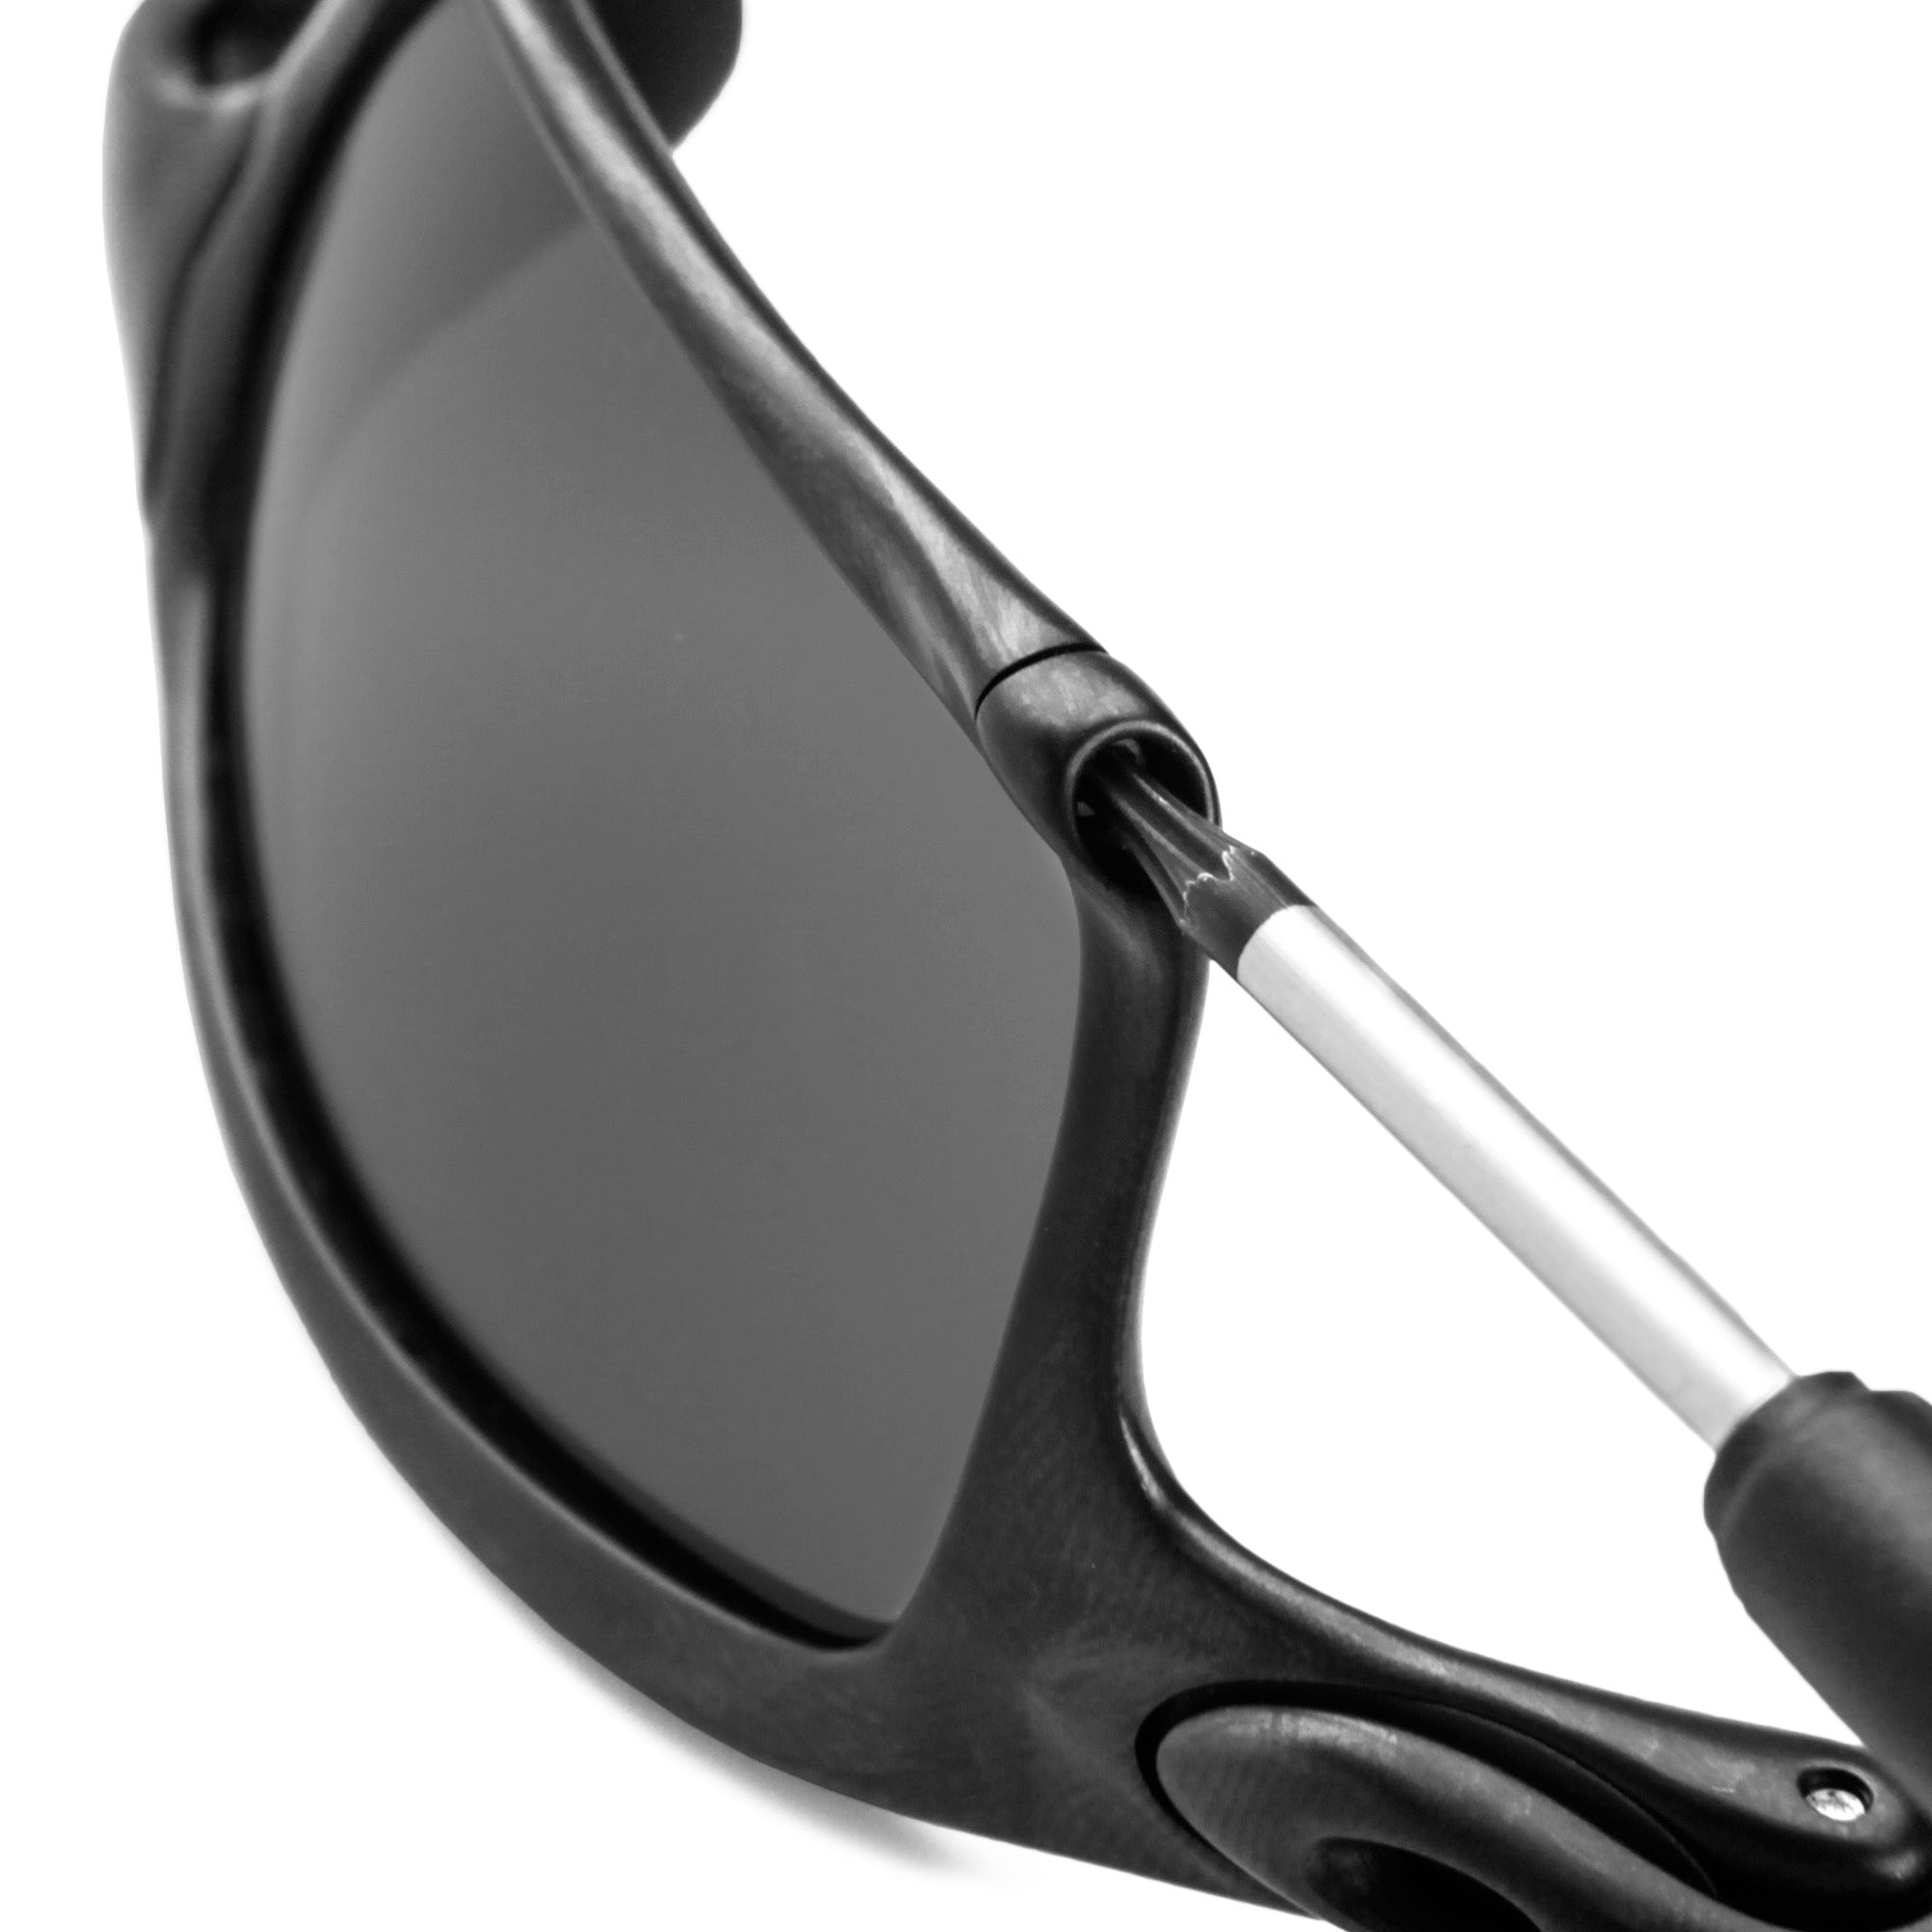 Installing Revant T6 screws in Oakley X Squared sunglasses